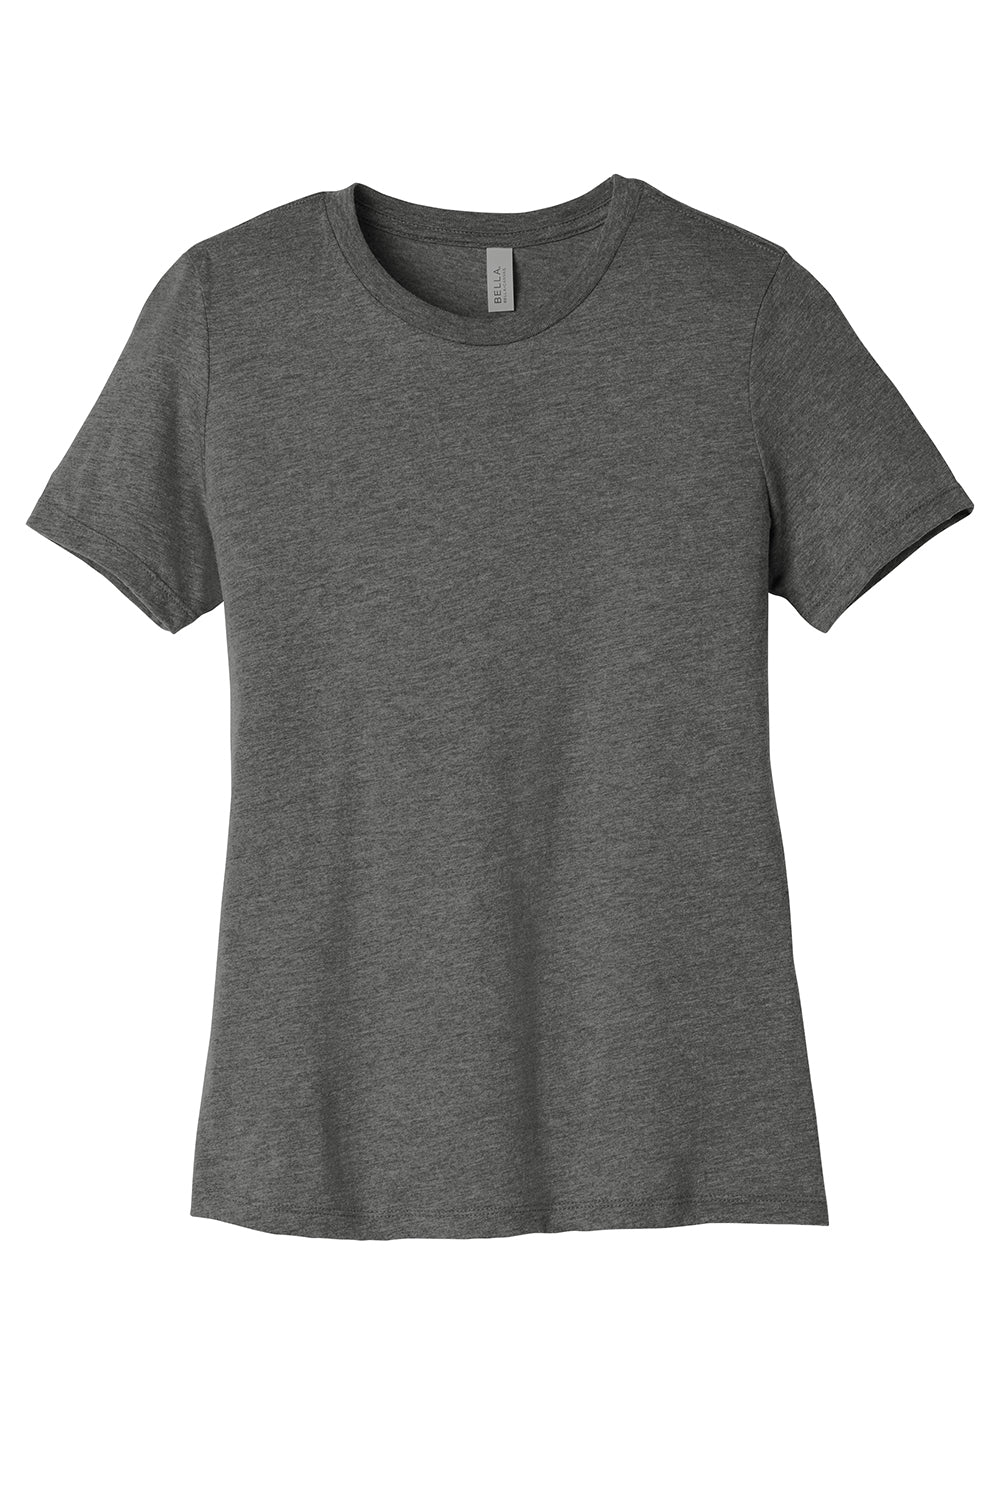 Bella + Canvas BC6413 Womens Short Sleeve Crewneck T-Shirt Grey Flat Front